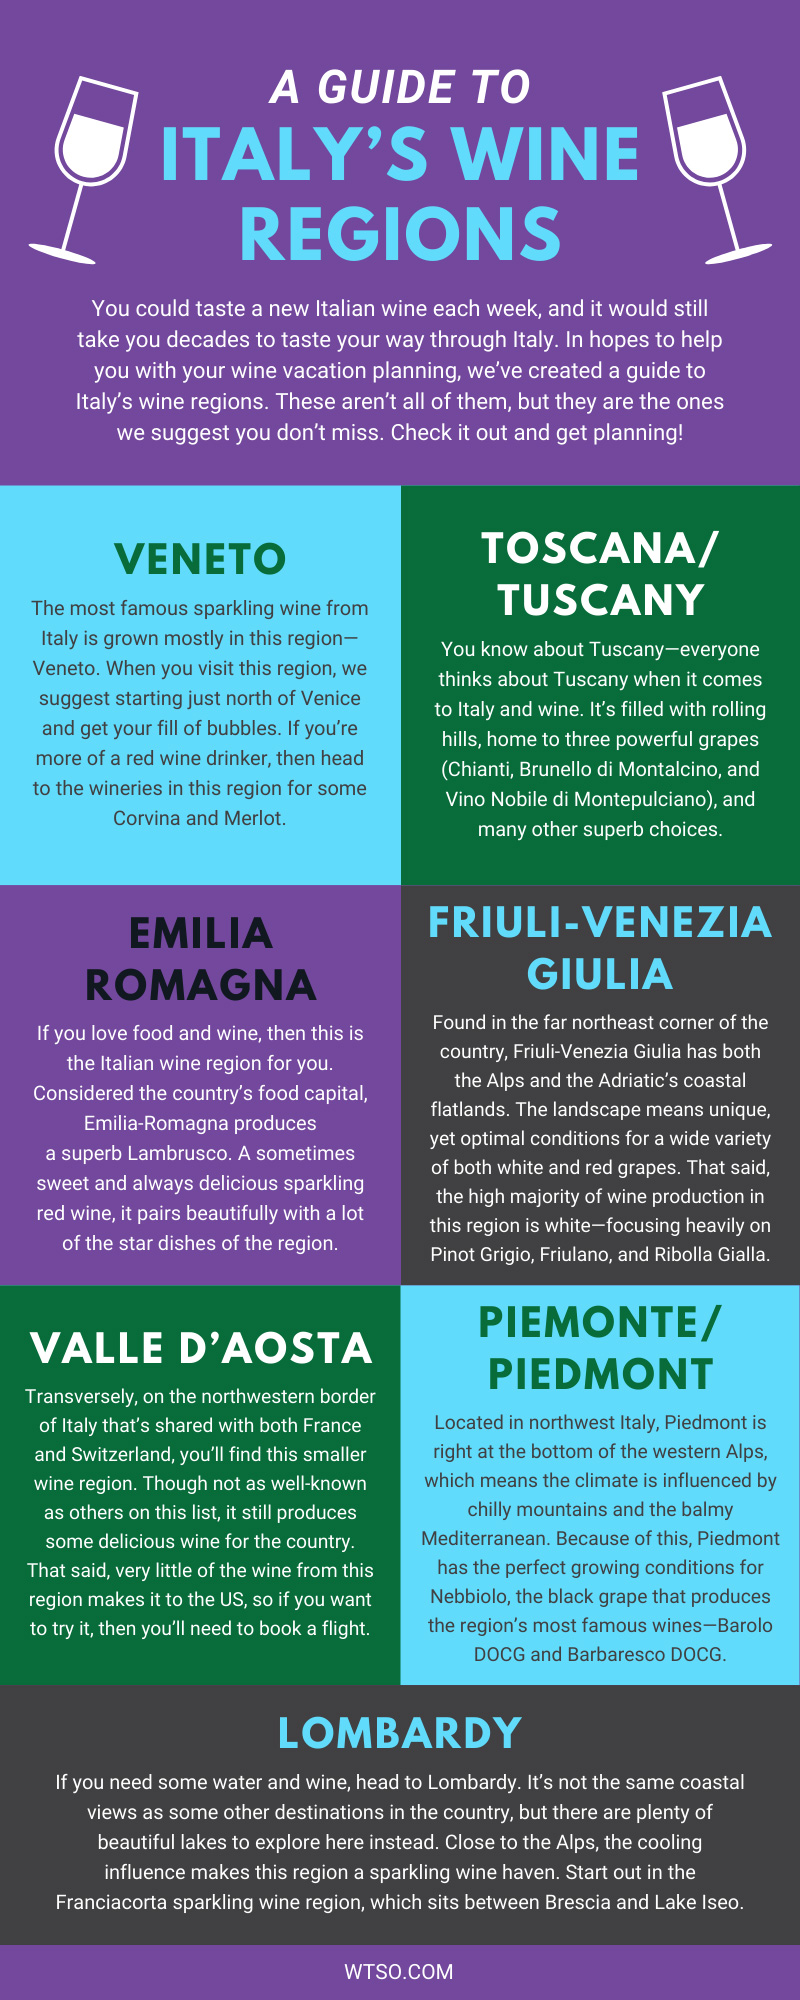 Italy’s Wine Regions